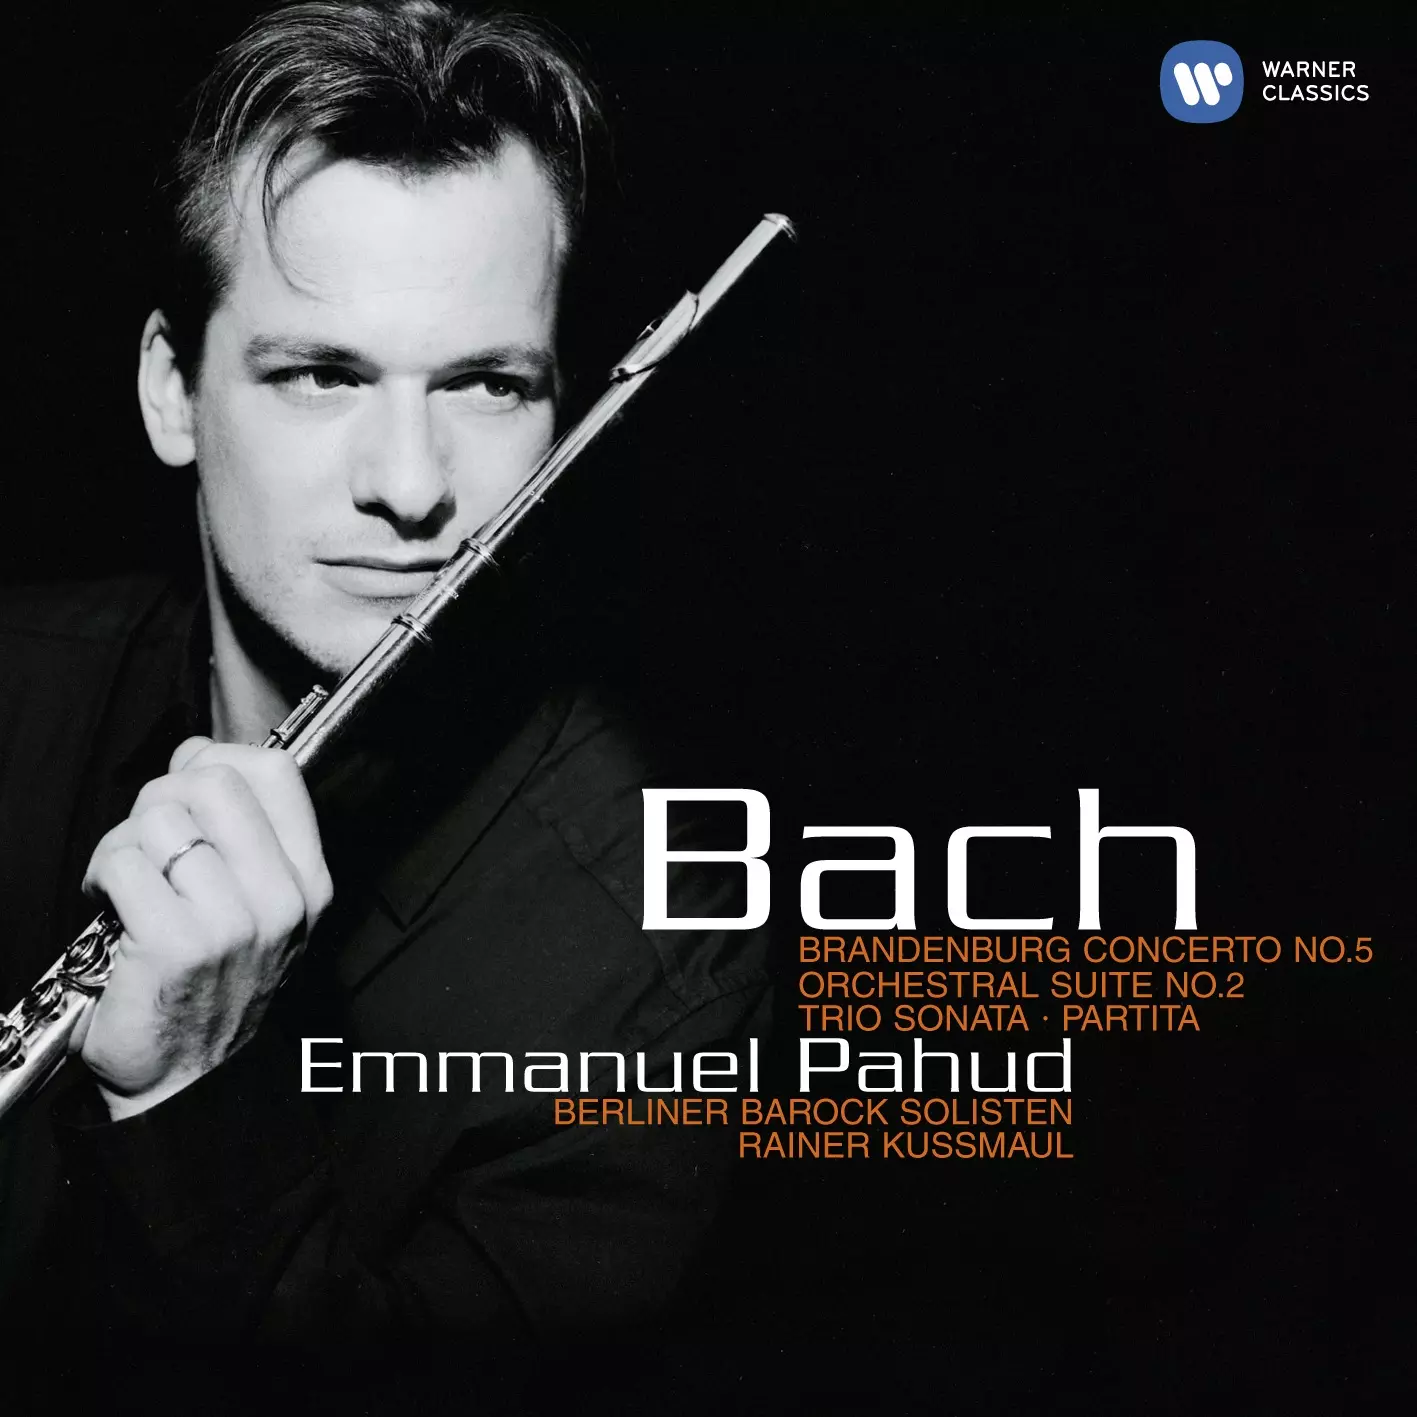 Bach: Brandenburg Concerto No. 5